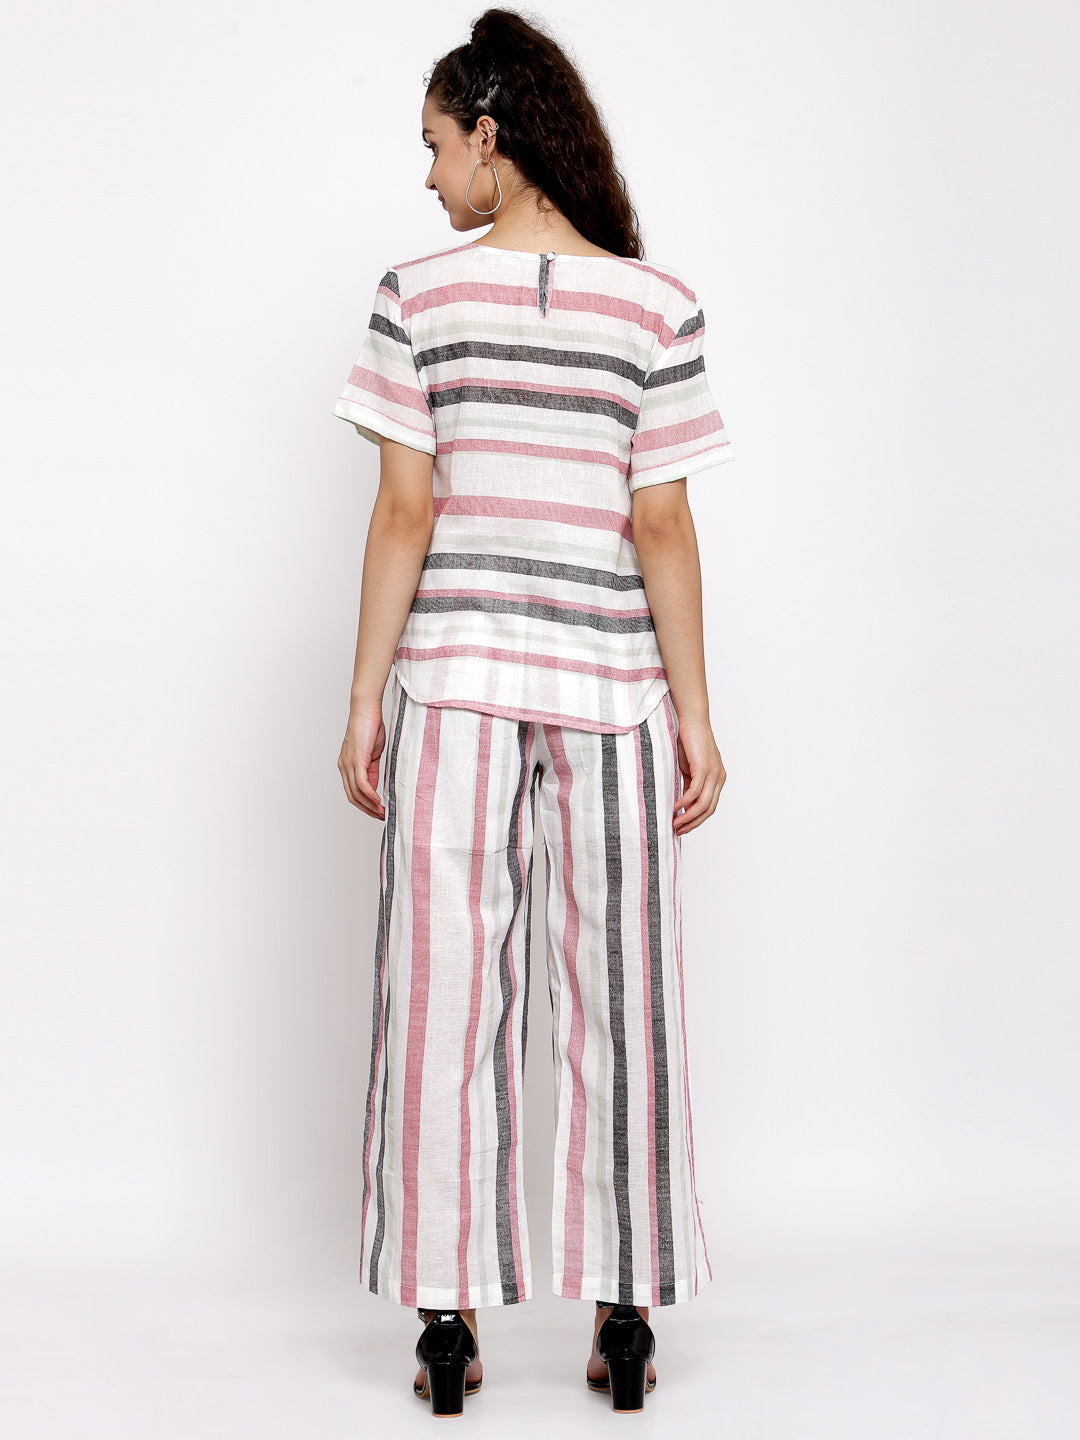 KLOTTHE Multicolor Stripe Printed A- Line Dress with Bottom